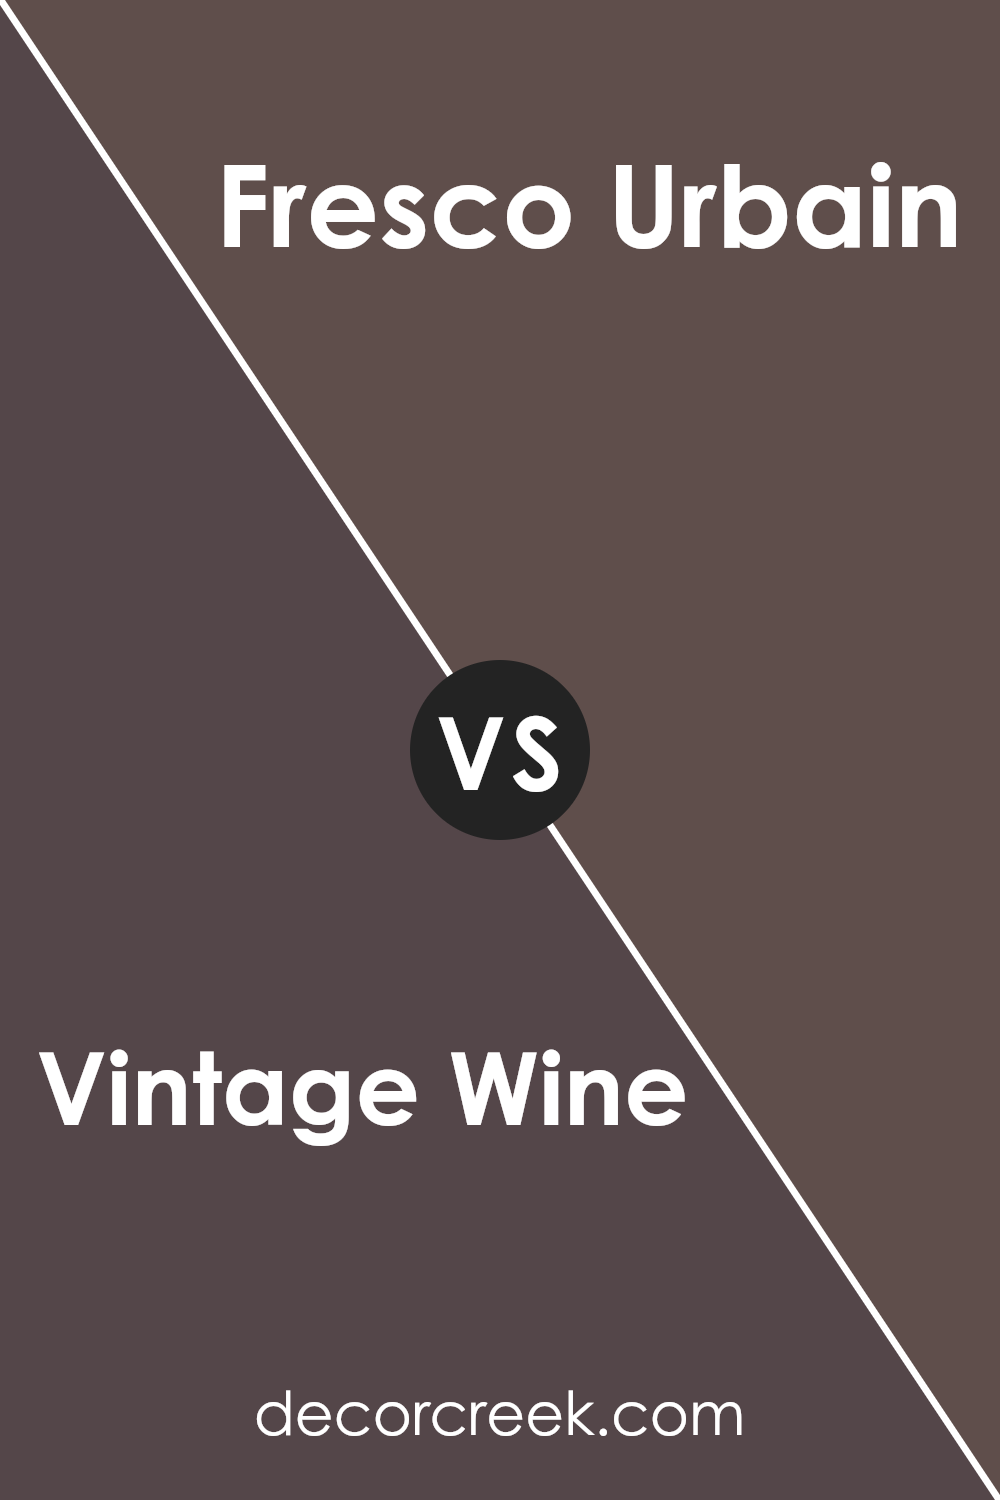 vintage_wine_2116_20_vs_fresco_urbain_1253